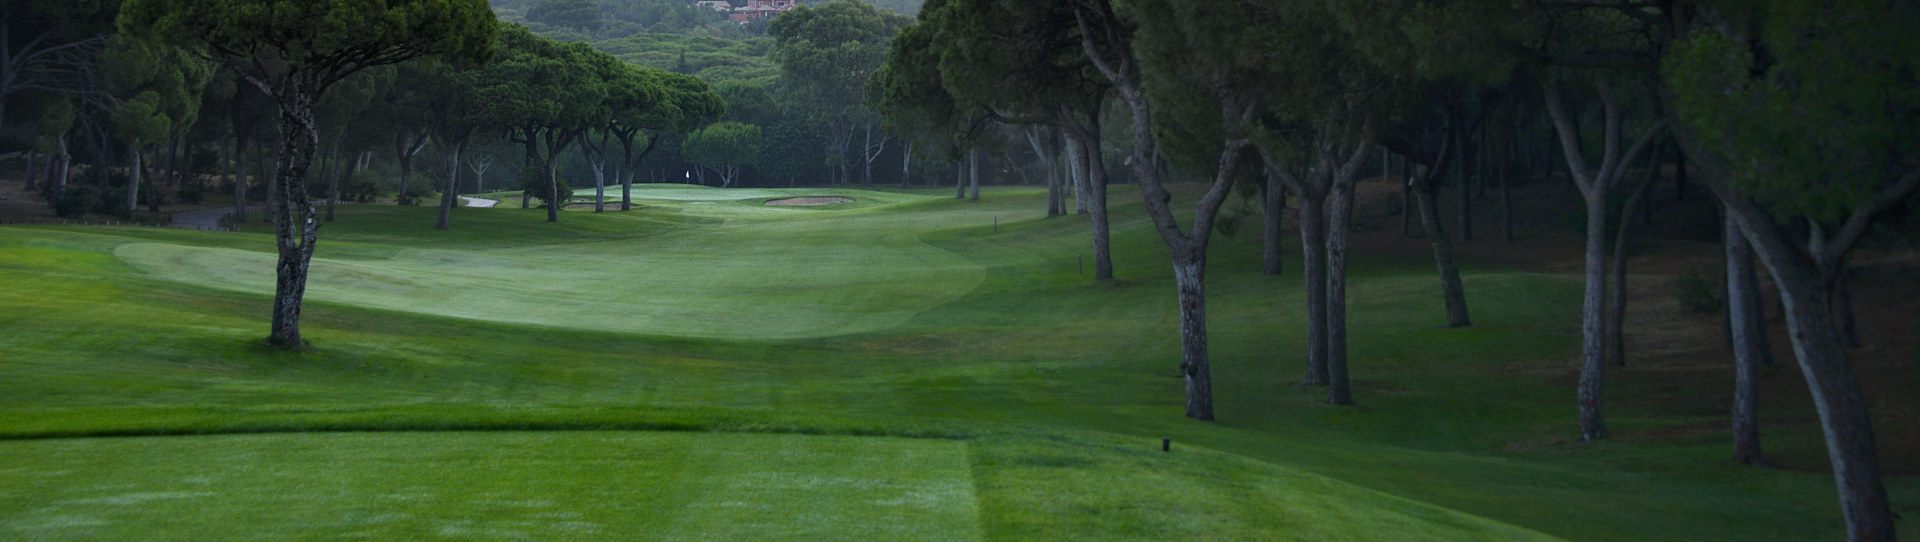 Portugal golf courses - Vilamoura Dom Pedro Old Course - Photo 3